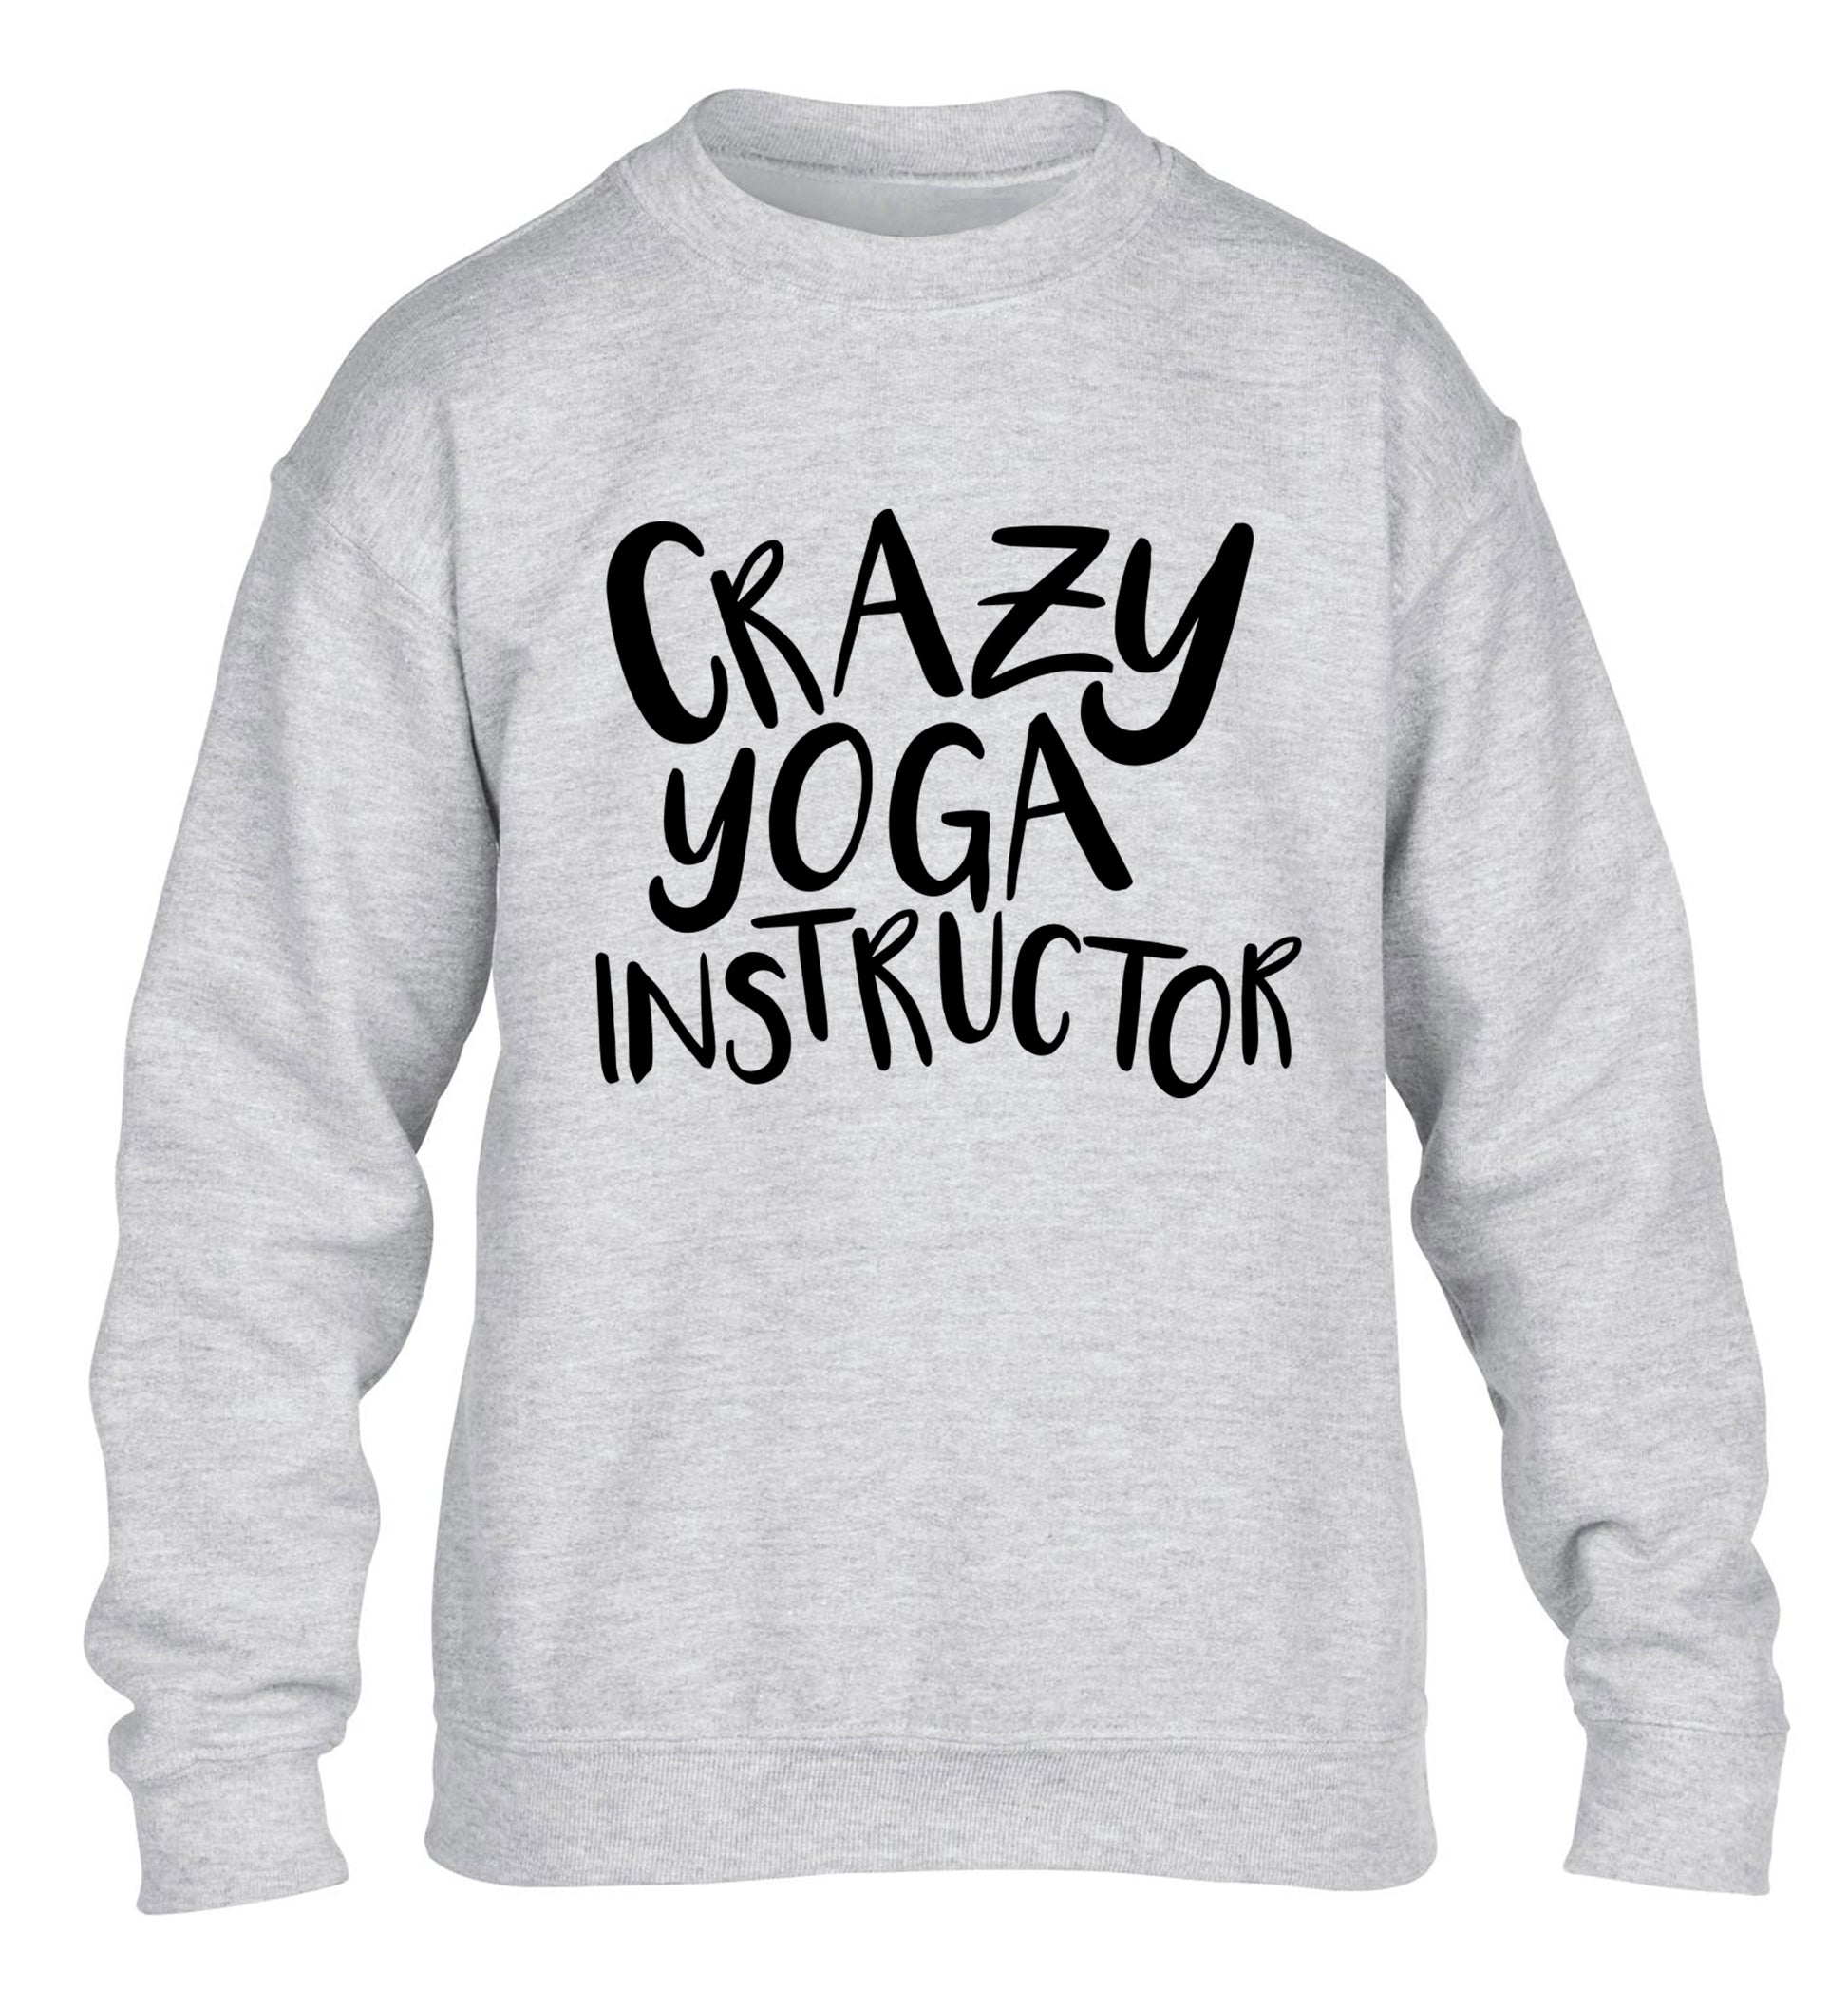 Crazy yoga instructor children's grey sweater 12-13 Years